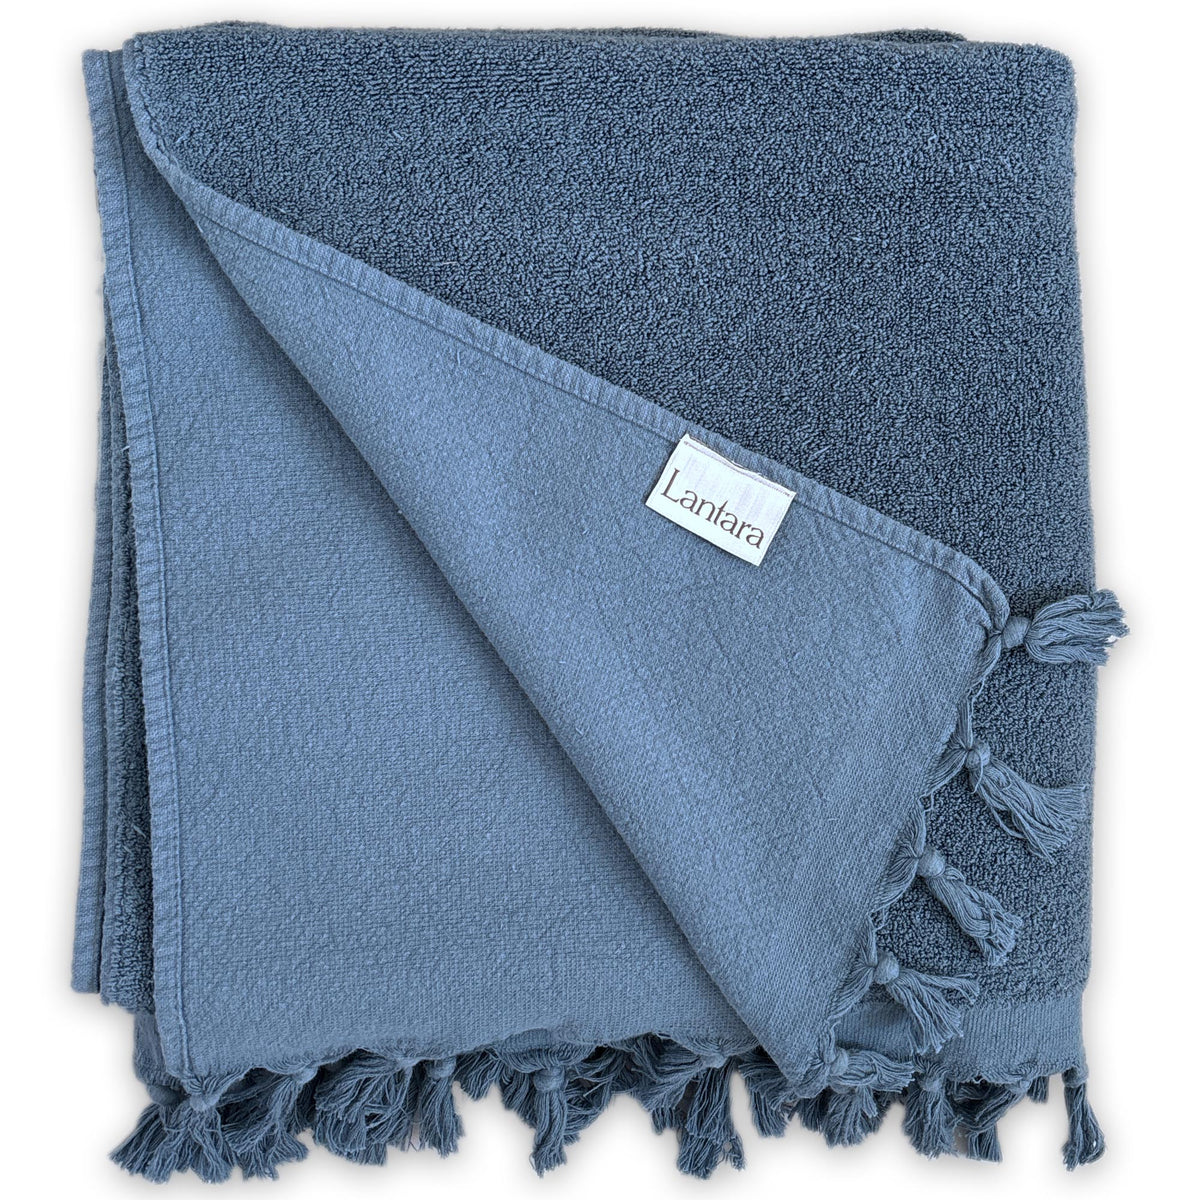 Hammam towel Terry cloth - Blue - 90x190cm